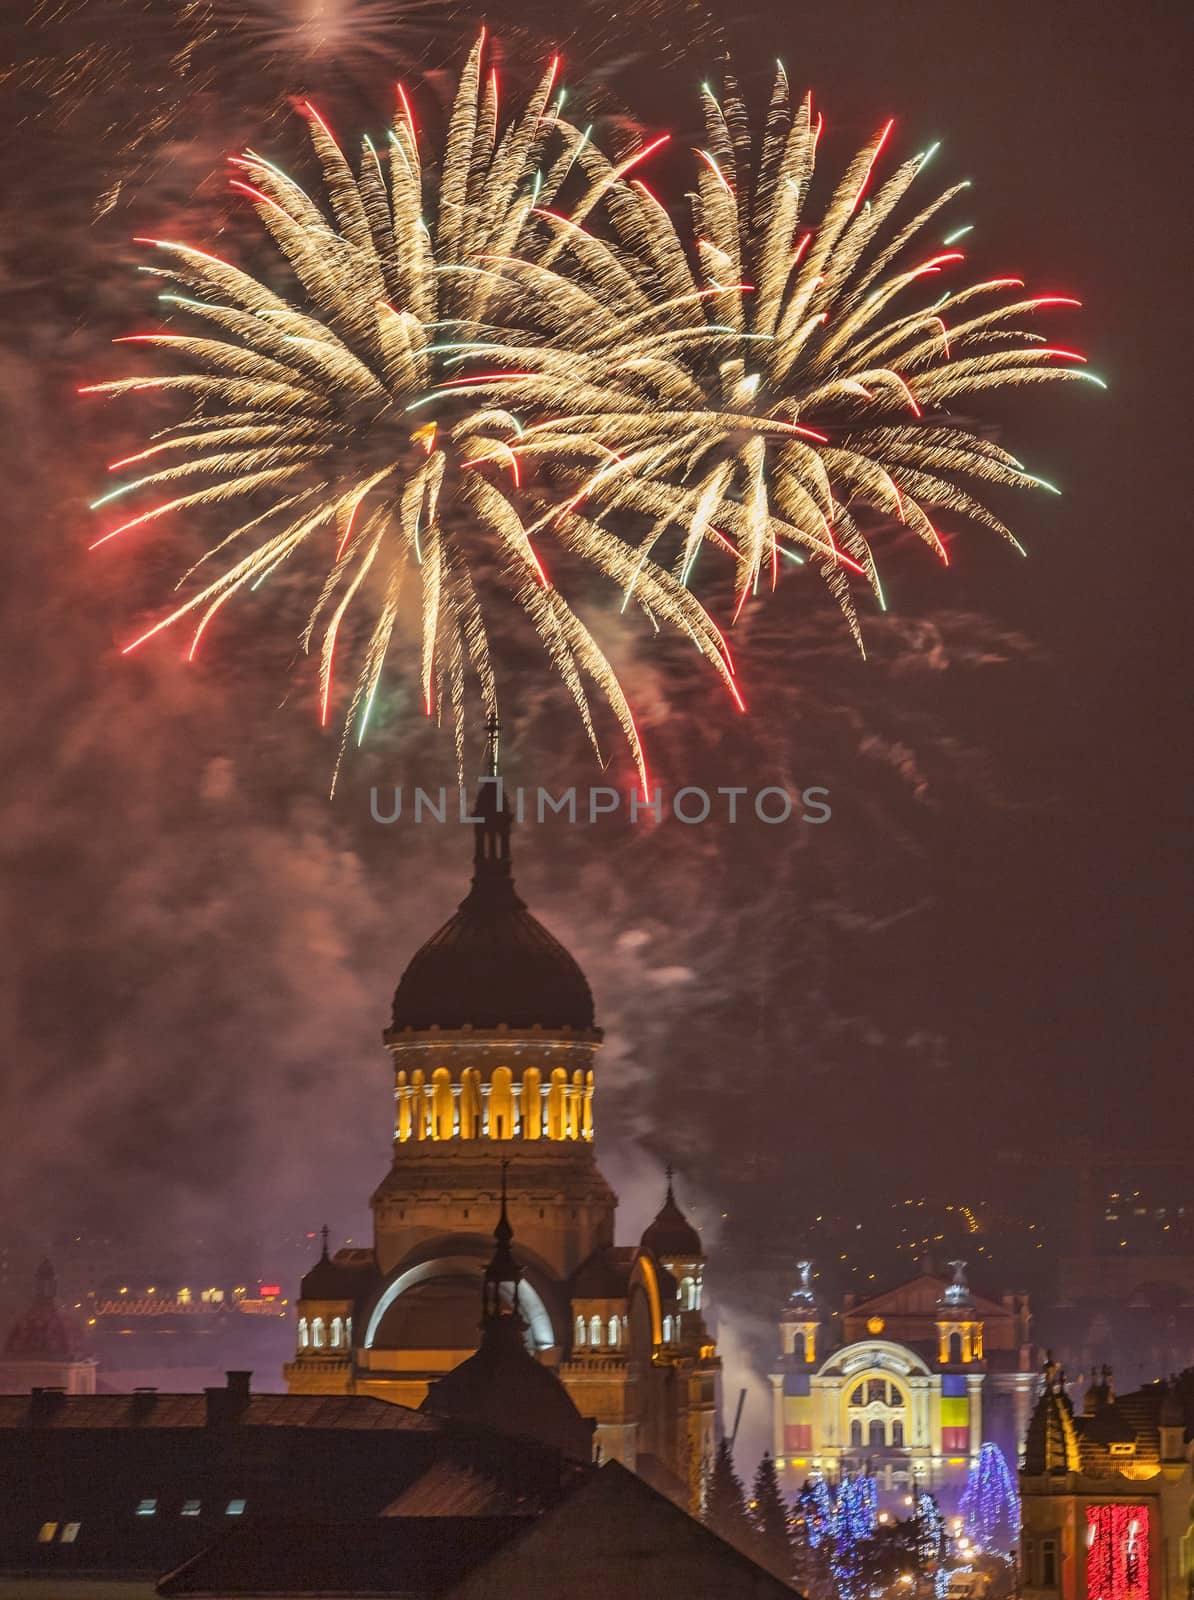 Fireworks in Cluj Napoca by RazvanPhotography